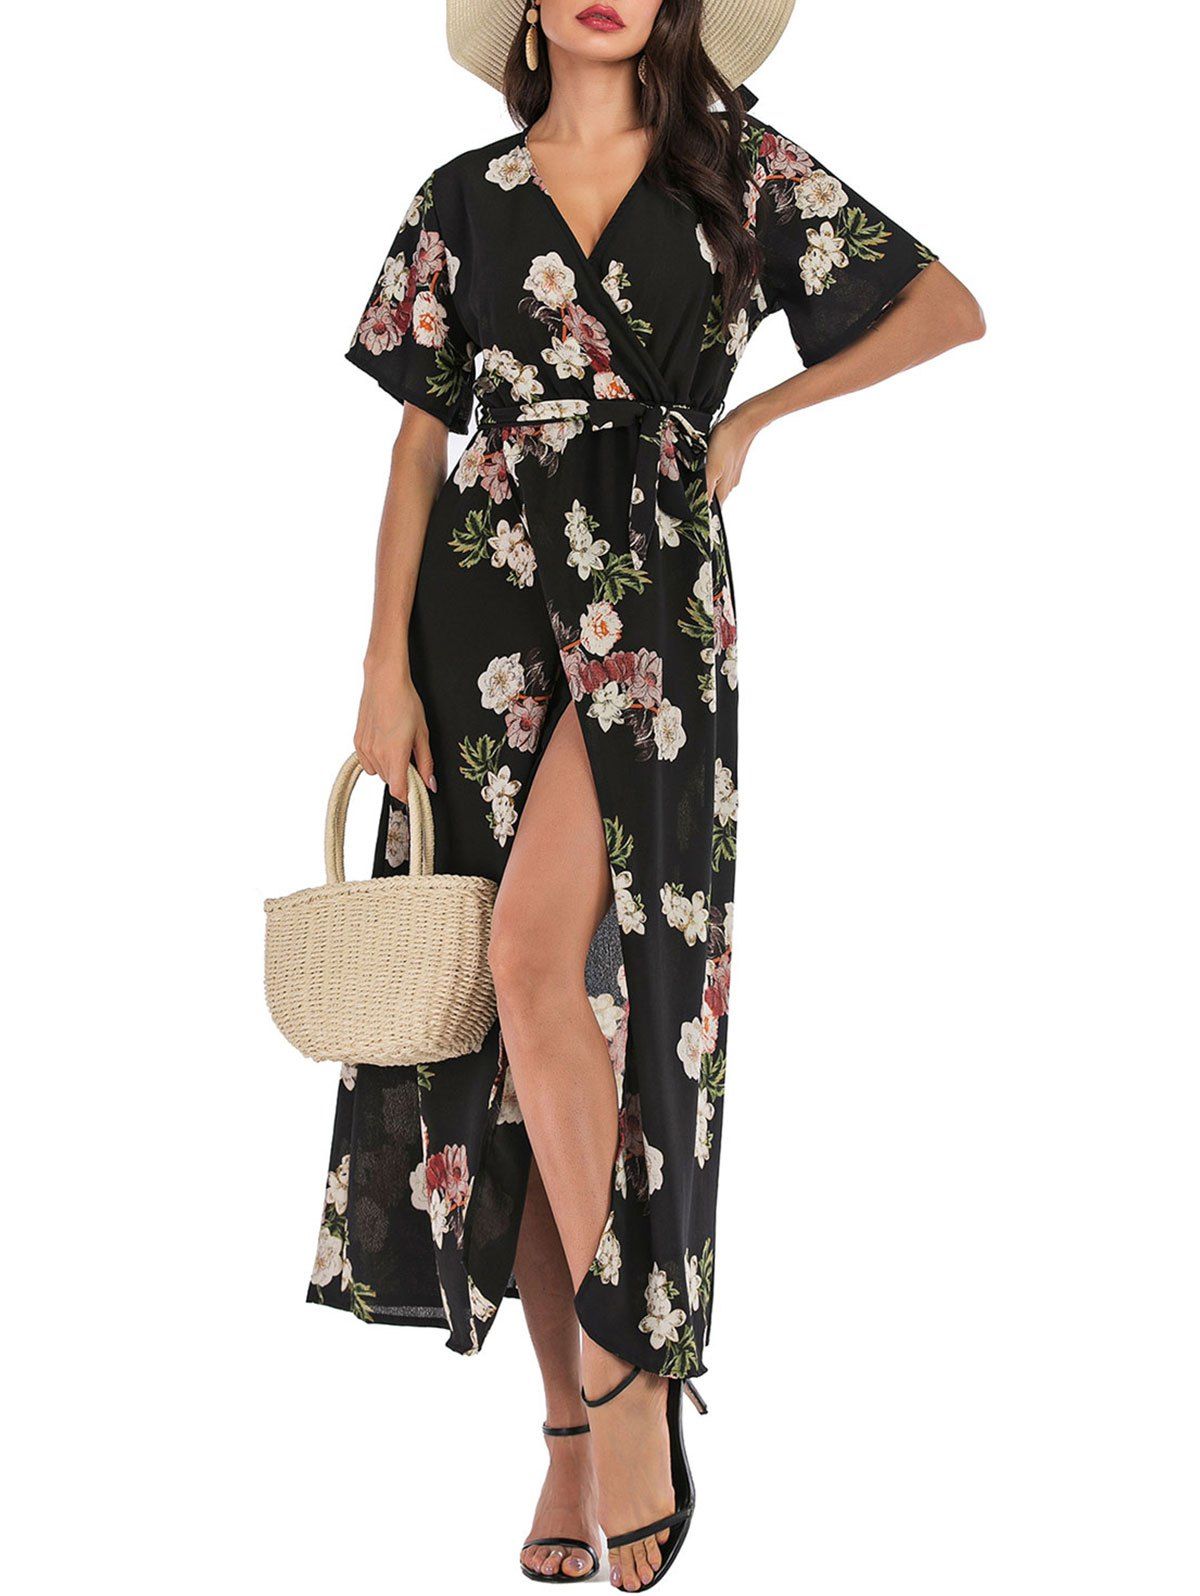 Flower Print Slit Belted Surplice Dress - BLACK XL